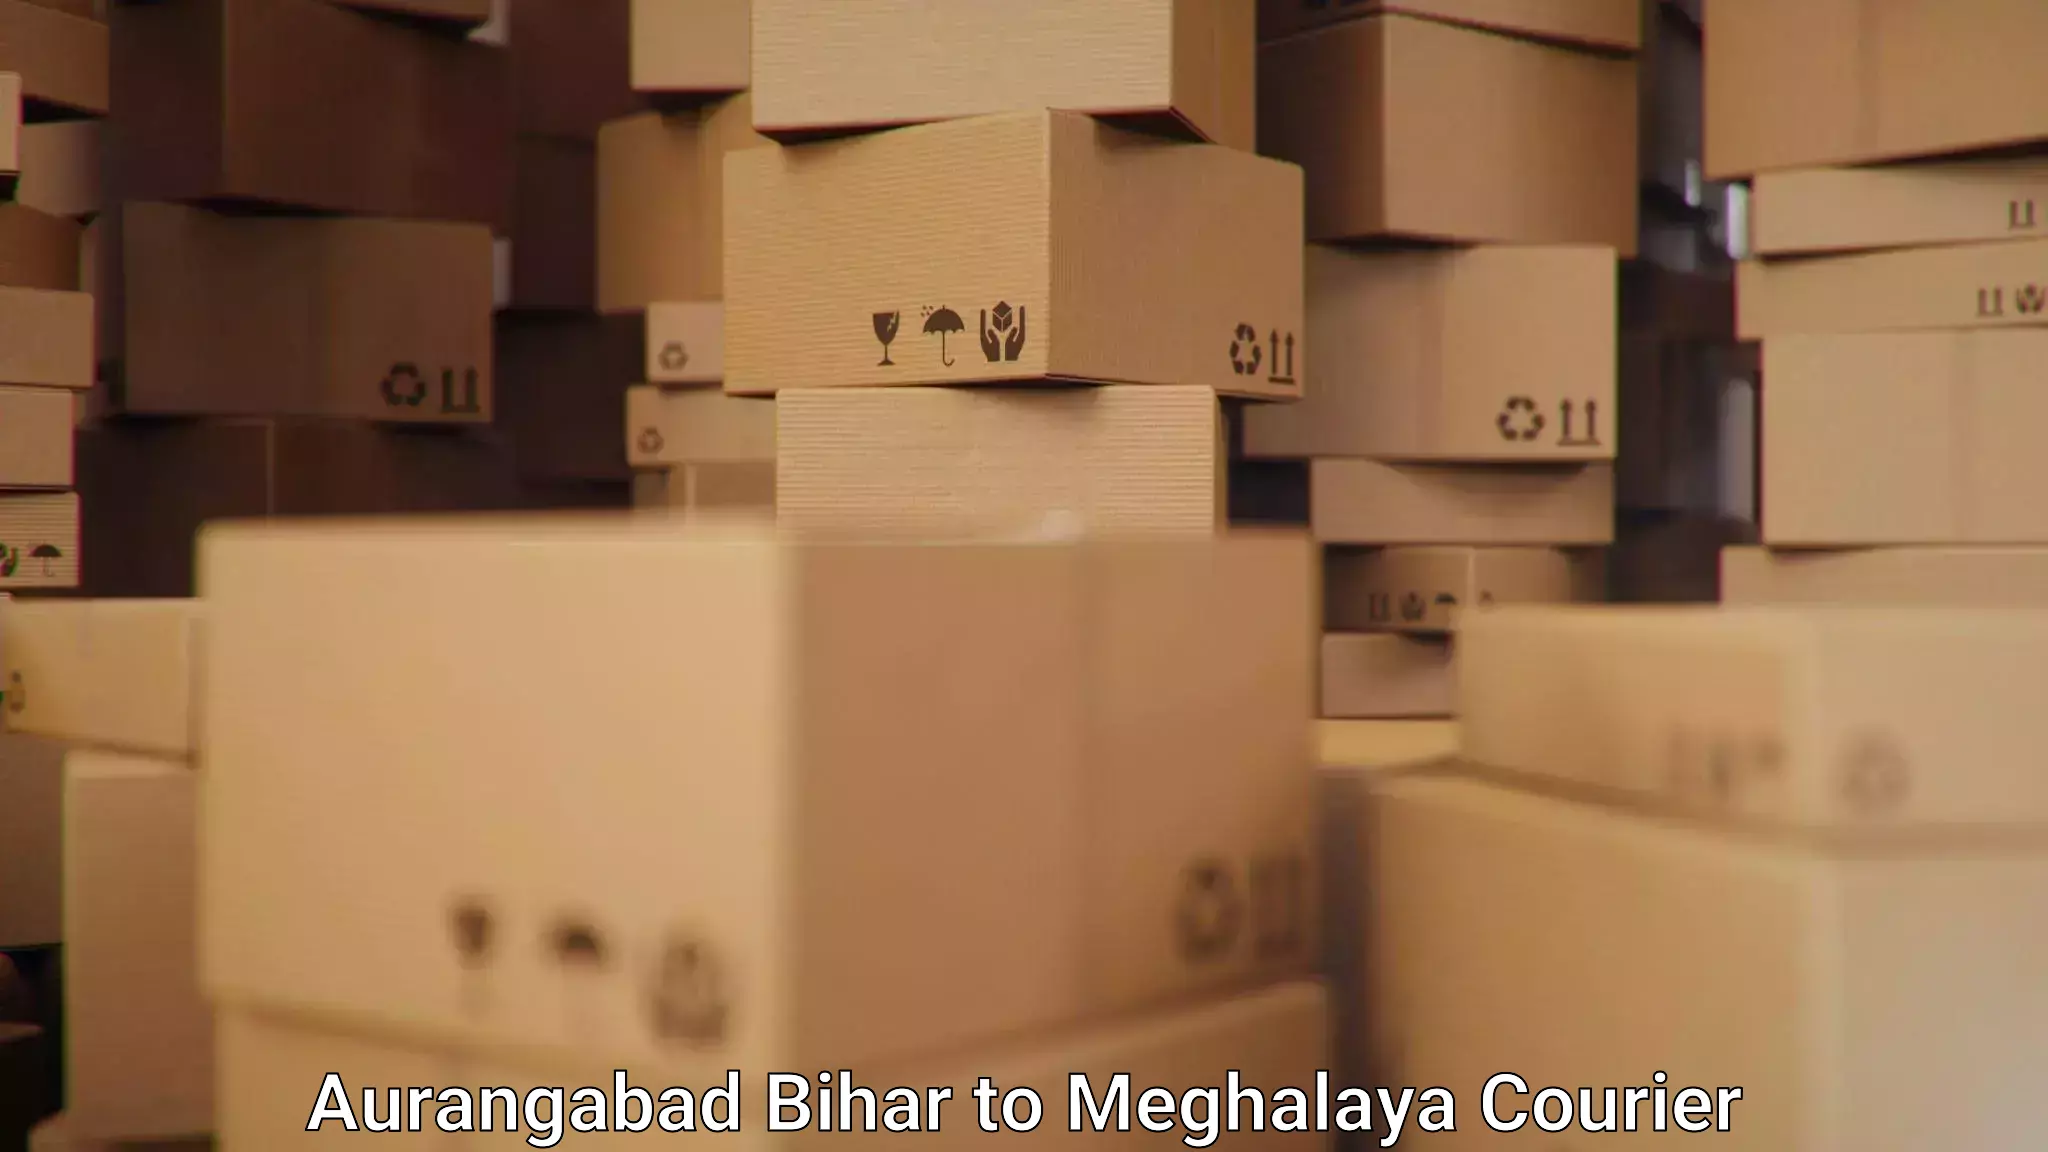 Shipping and handling Aurangabad Bihar to Meghalaya